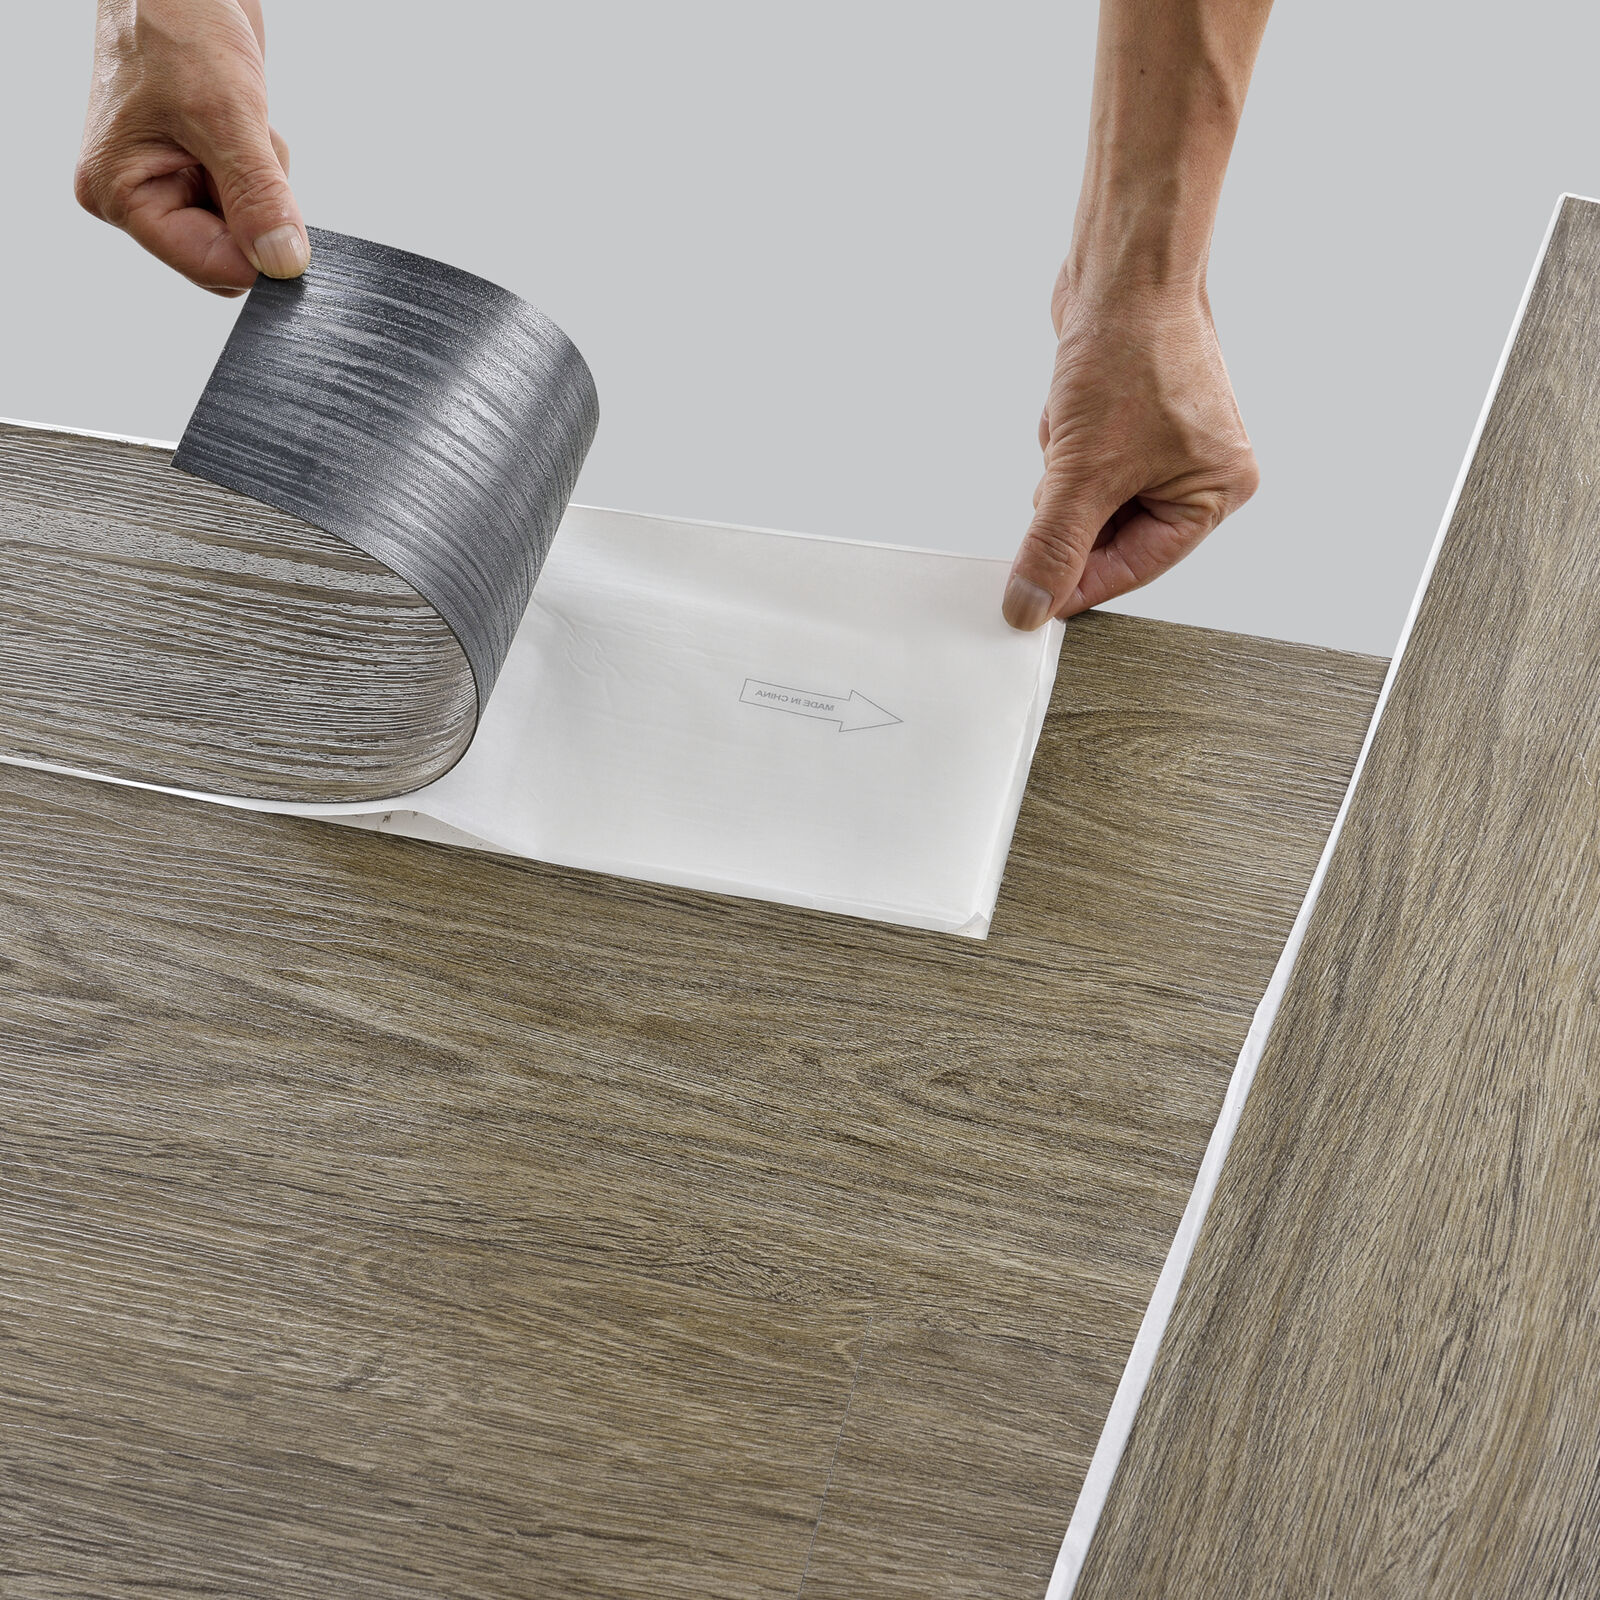 Self adhesive PVC Floor Planks – Self adhesive floor tiles